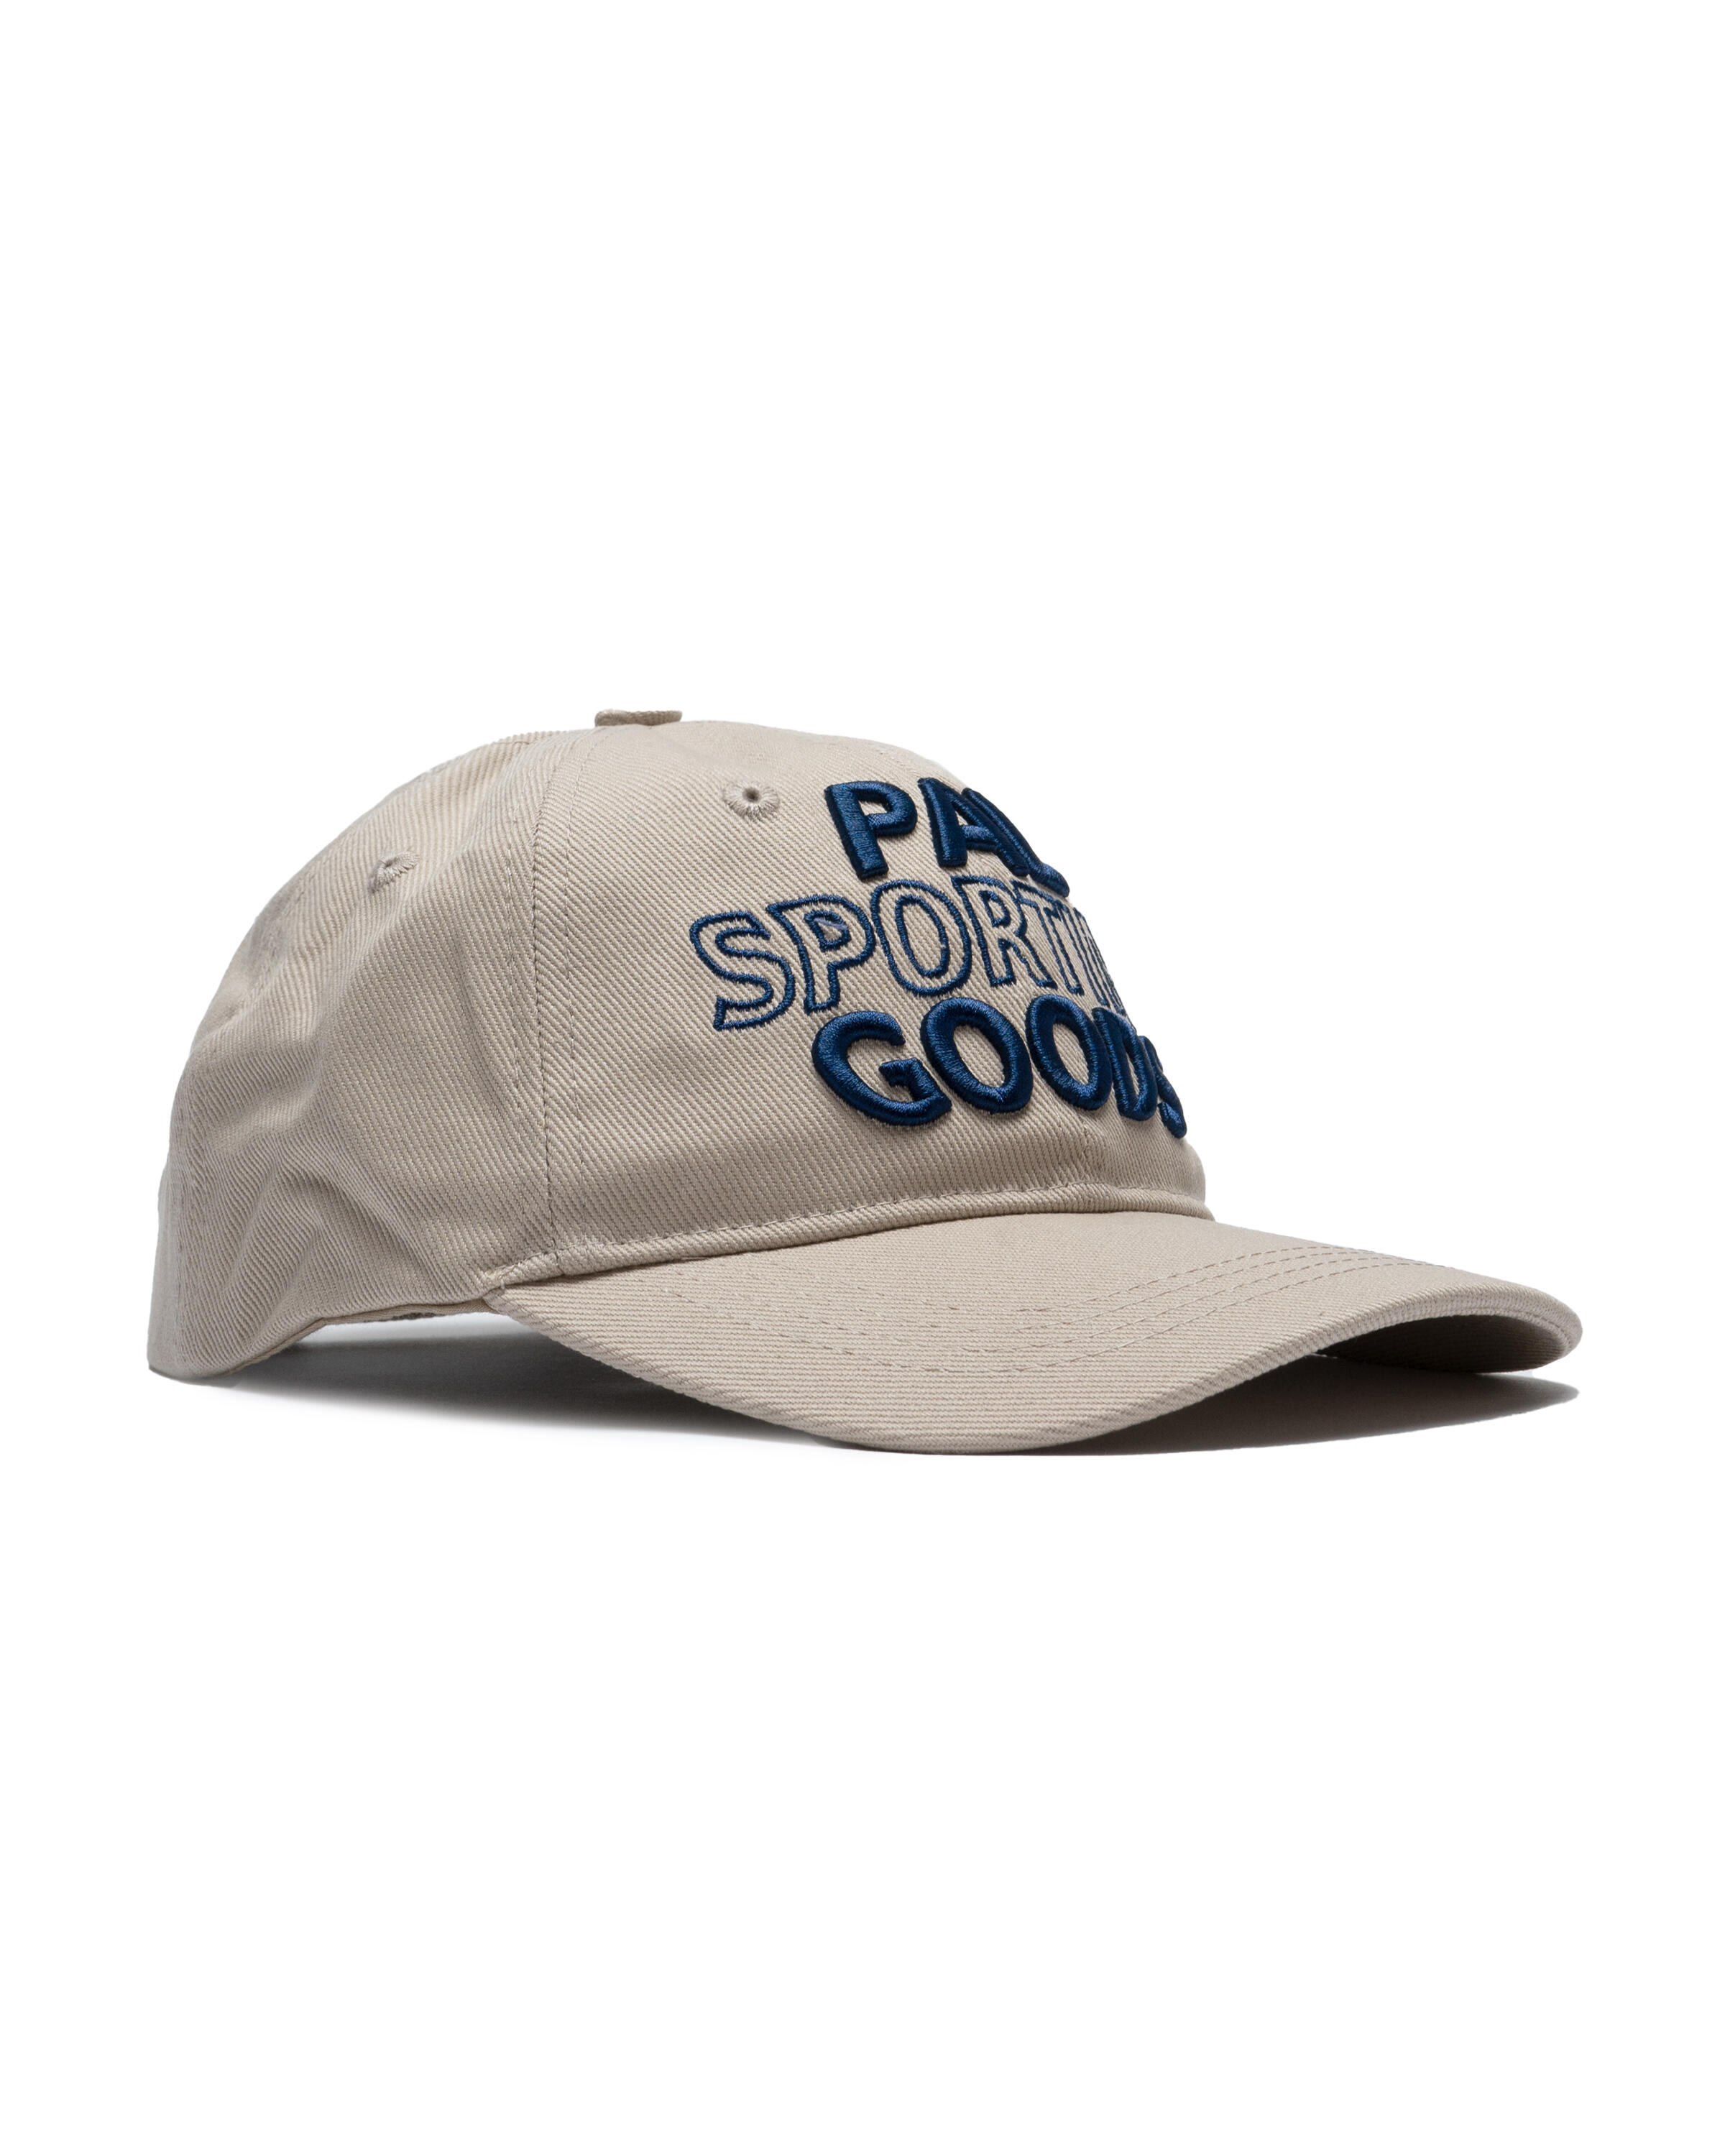 pal sporting goods trademark cap